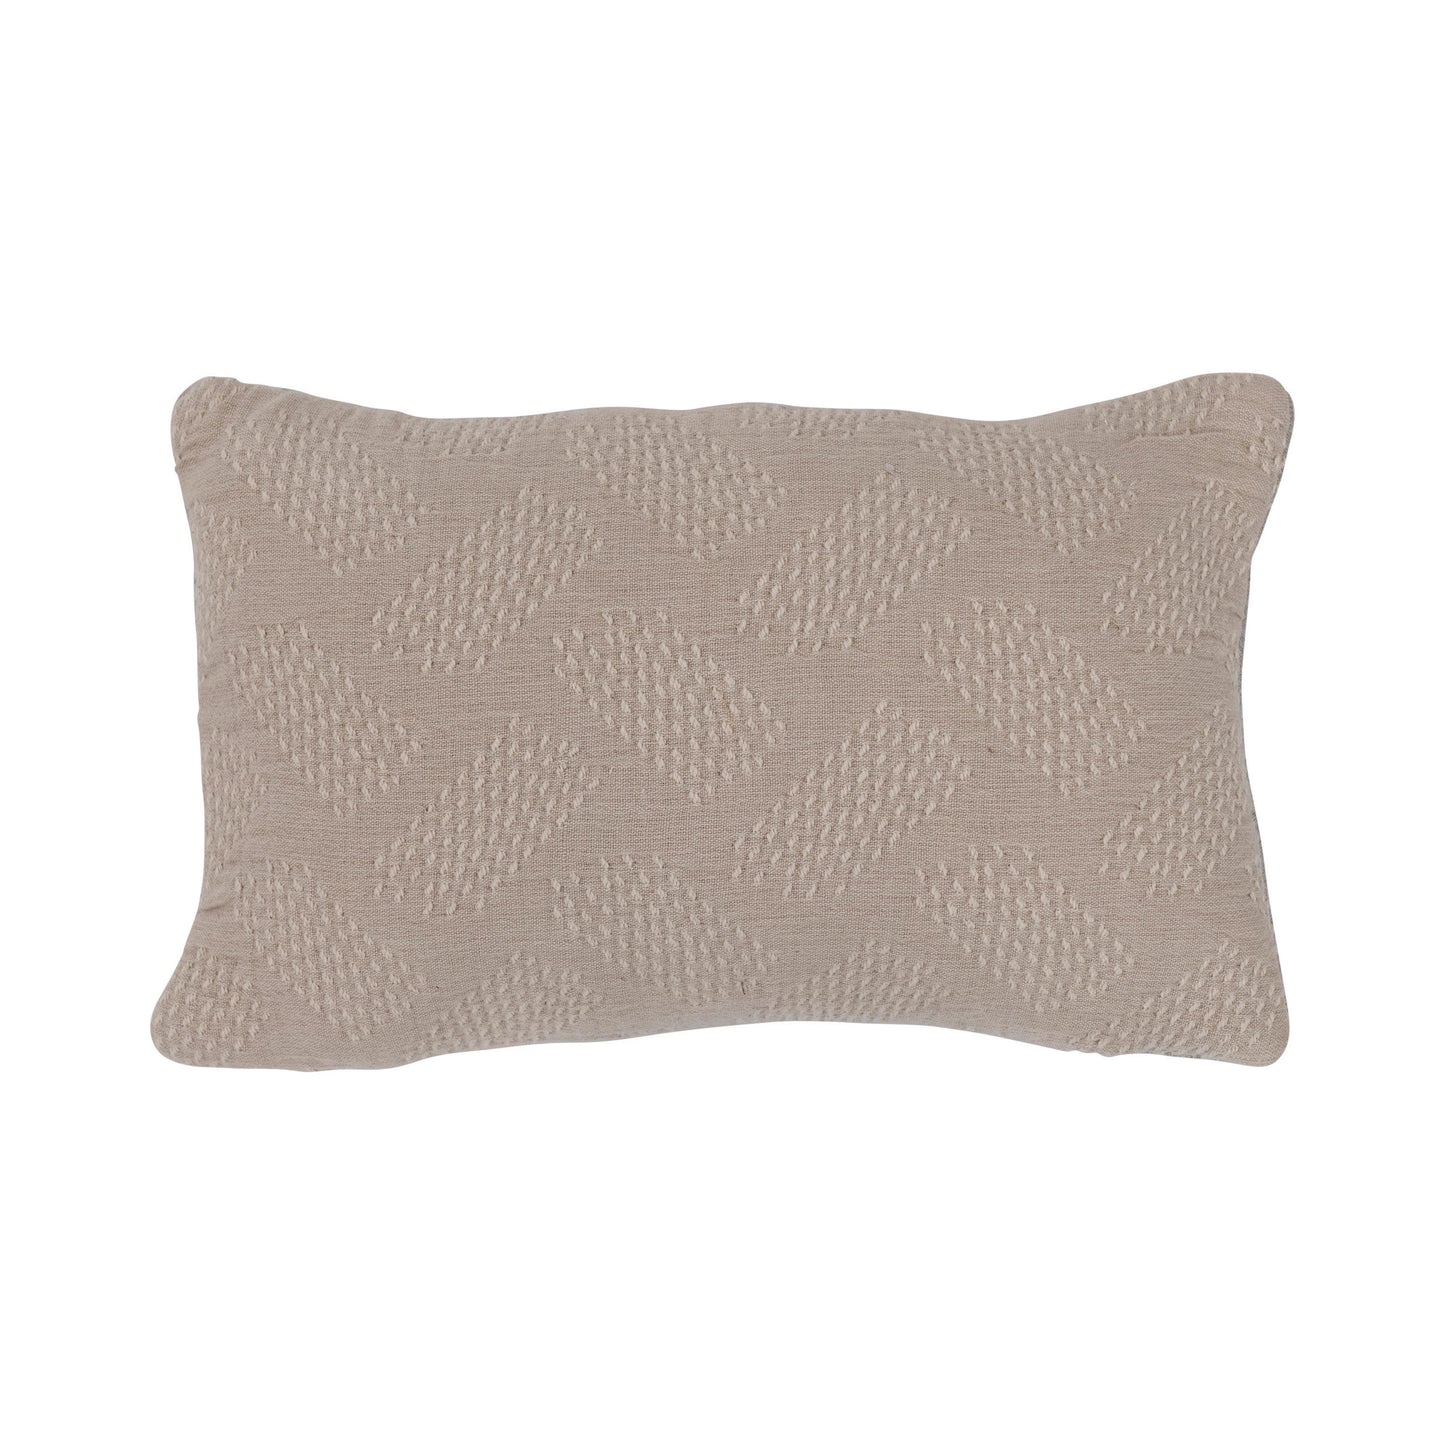 Two-Sided Jacquard Lumbar Pillow